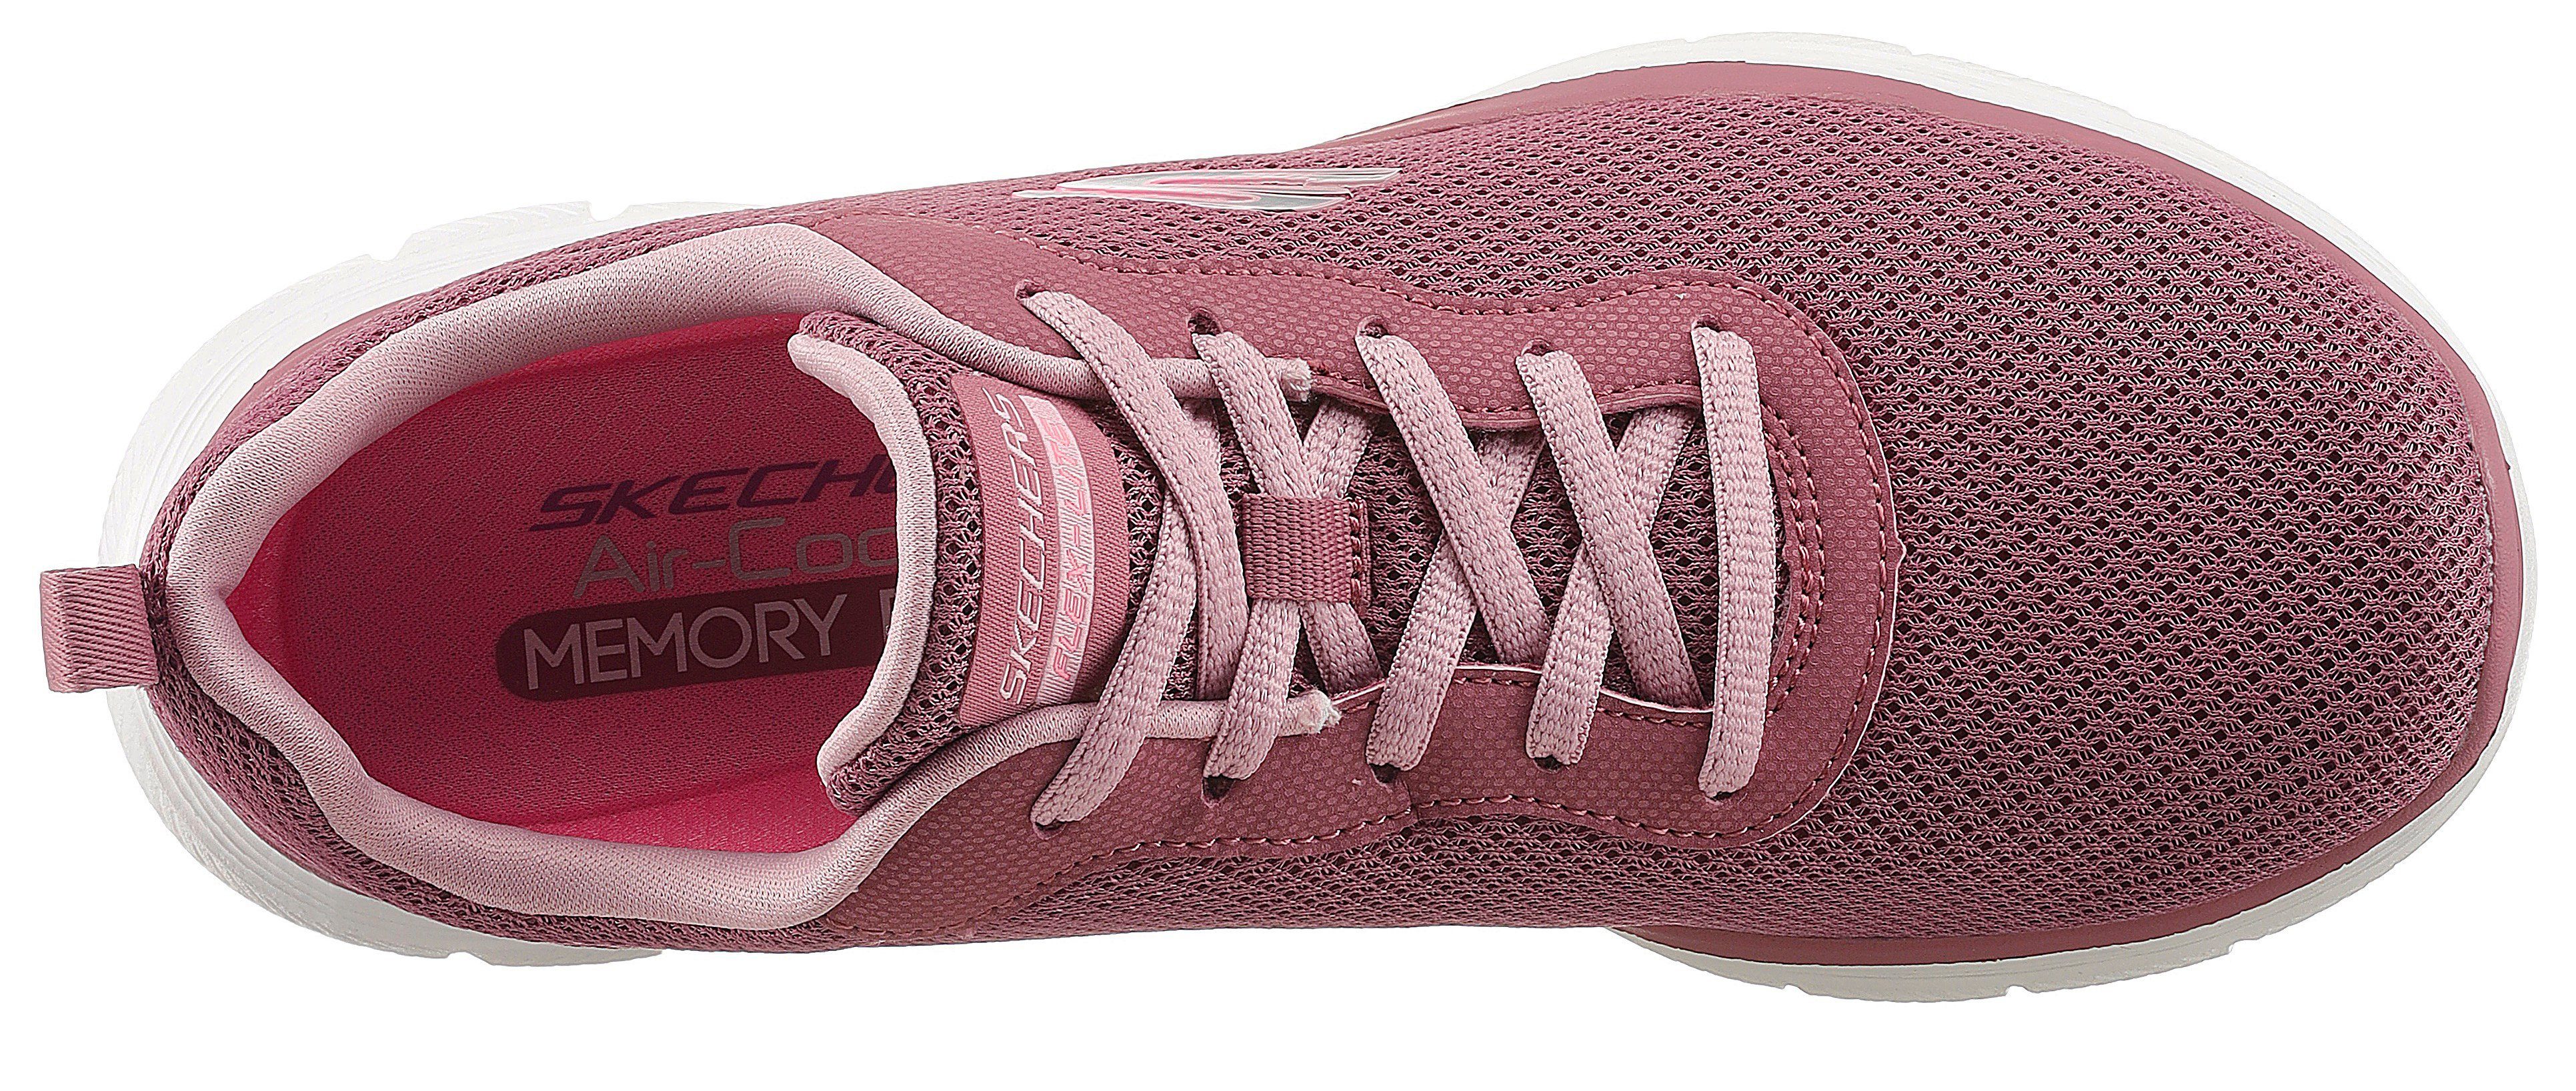 FLEX Foam Air-Cooled mit Ausstattung Memory Skechers APPEAL 4.0 VIEW Sneaker mauve-rosa BRILLINAT